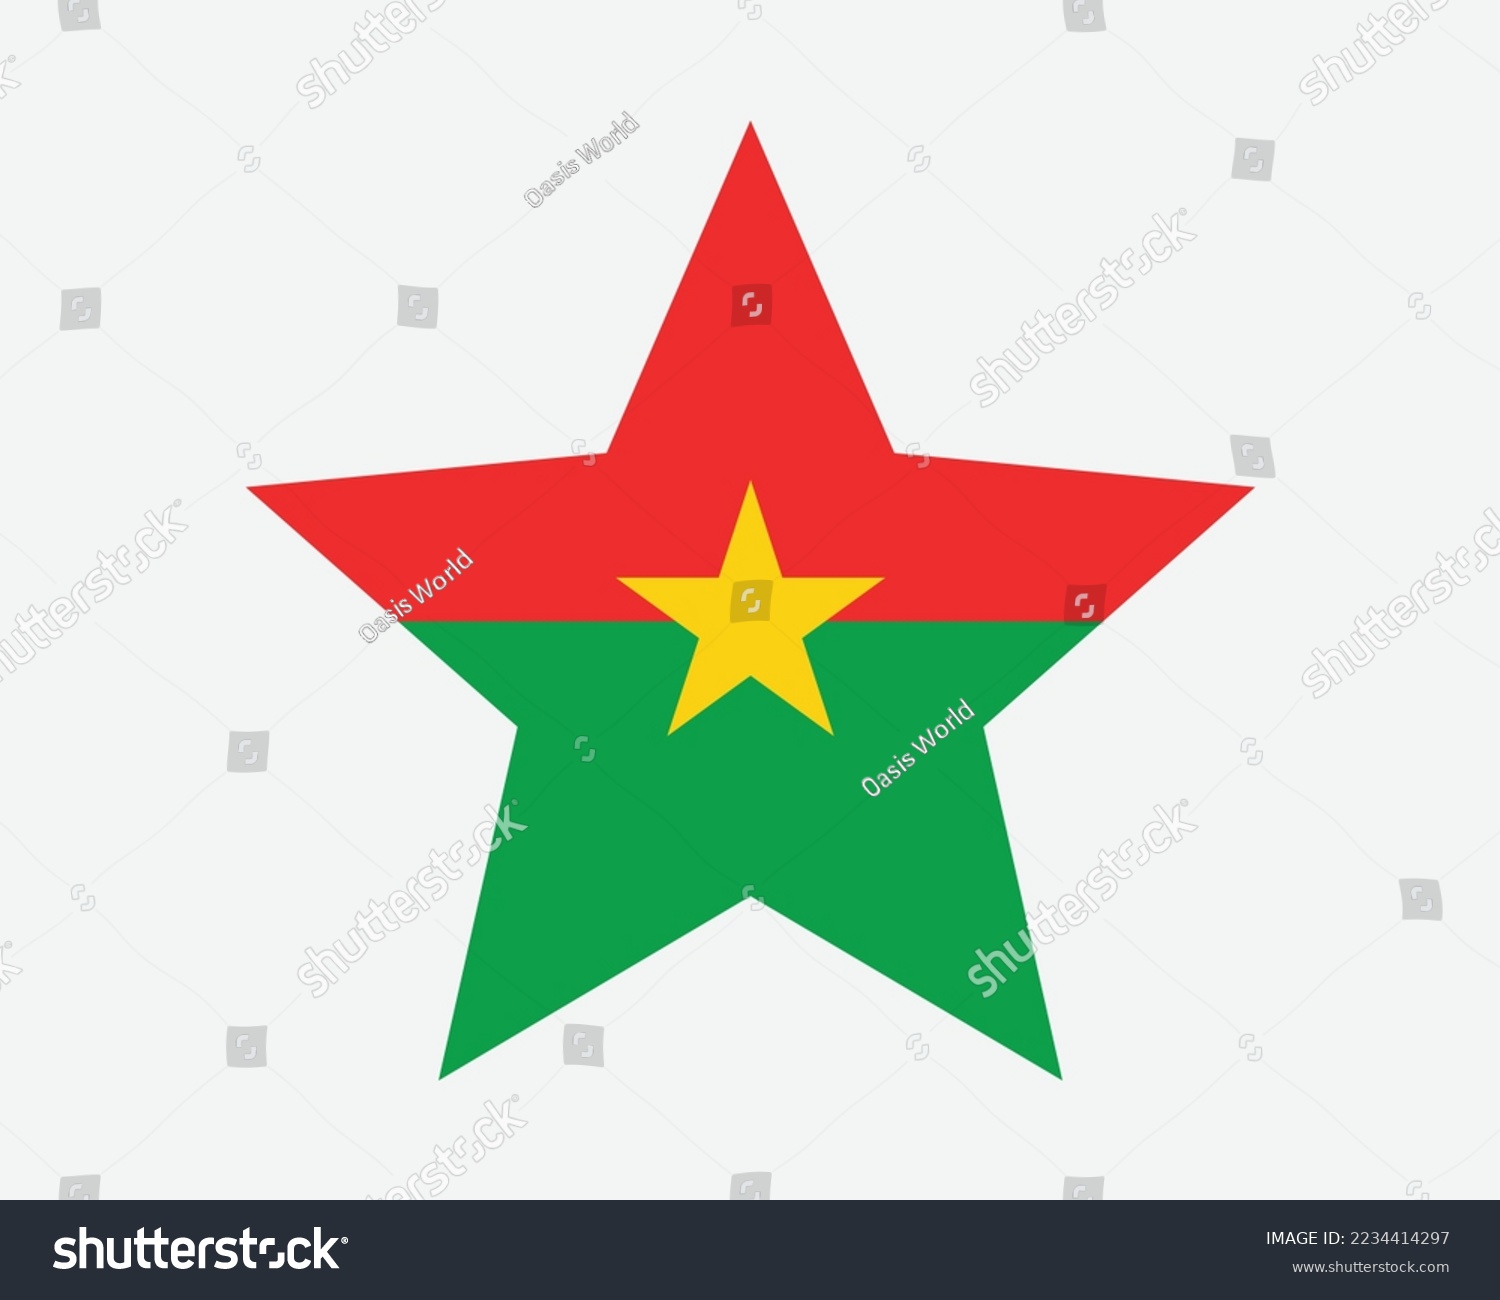 SVG of Burkina Faso Star Flag. Burkinabè Star Shape Flag. Country National Banner Icon Symbol Vector 2D Flat Artwork Graphic Illustration svg